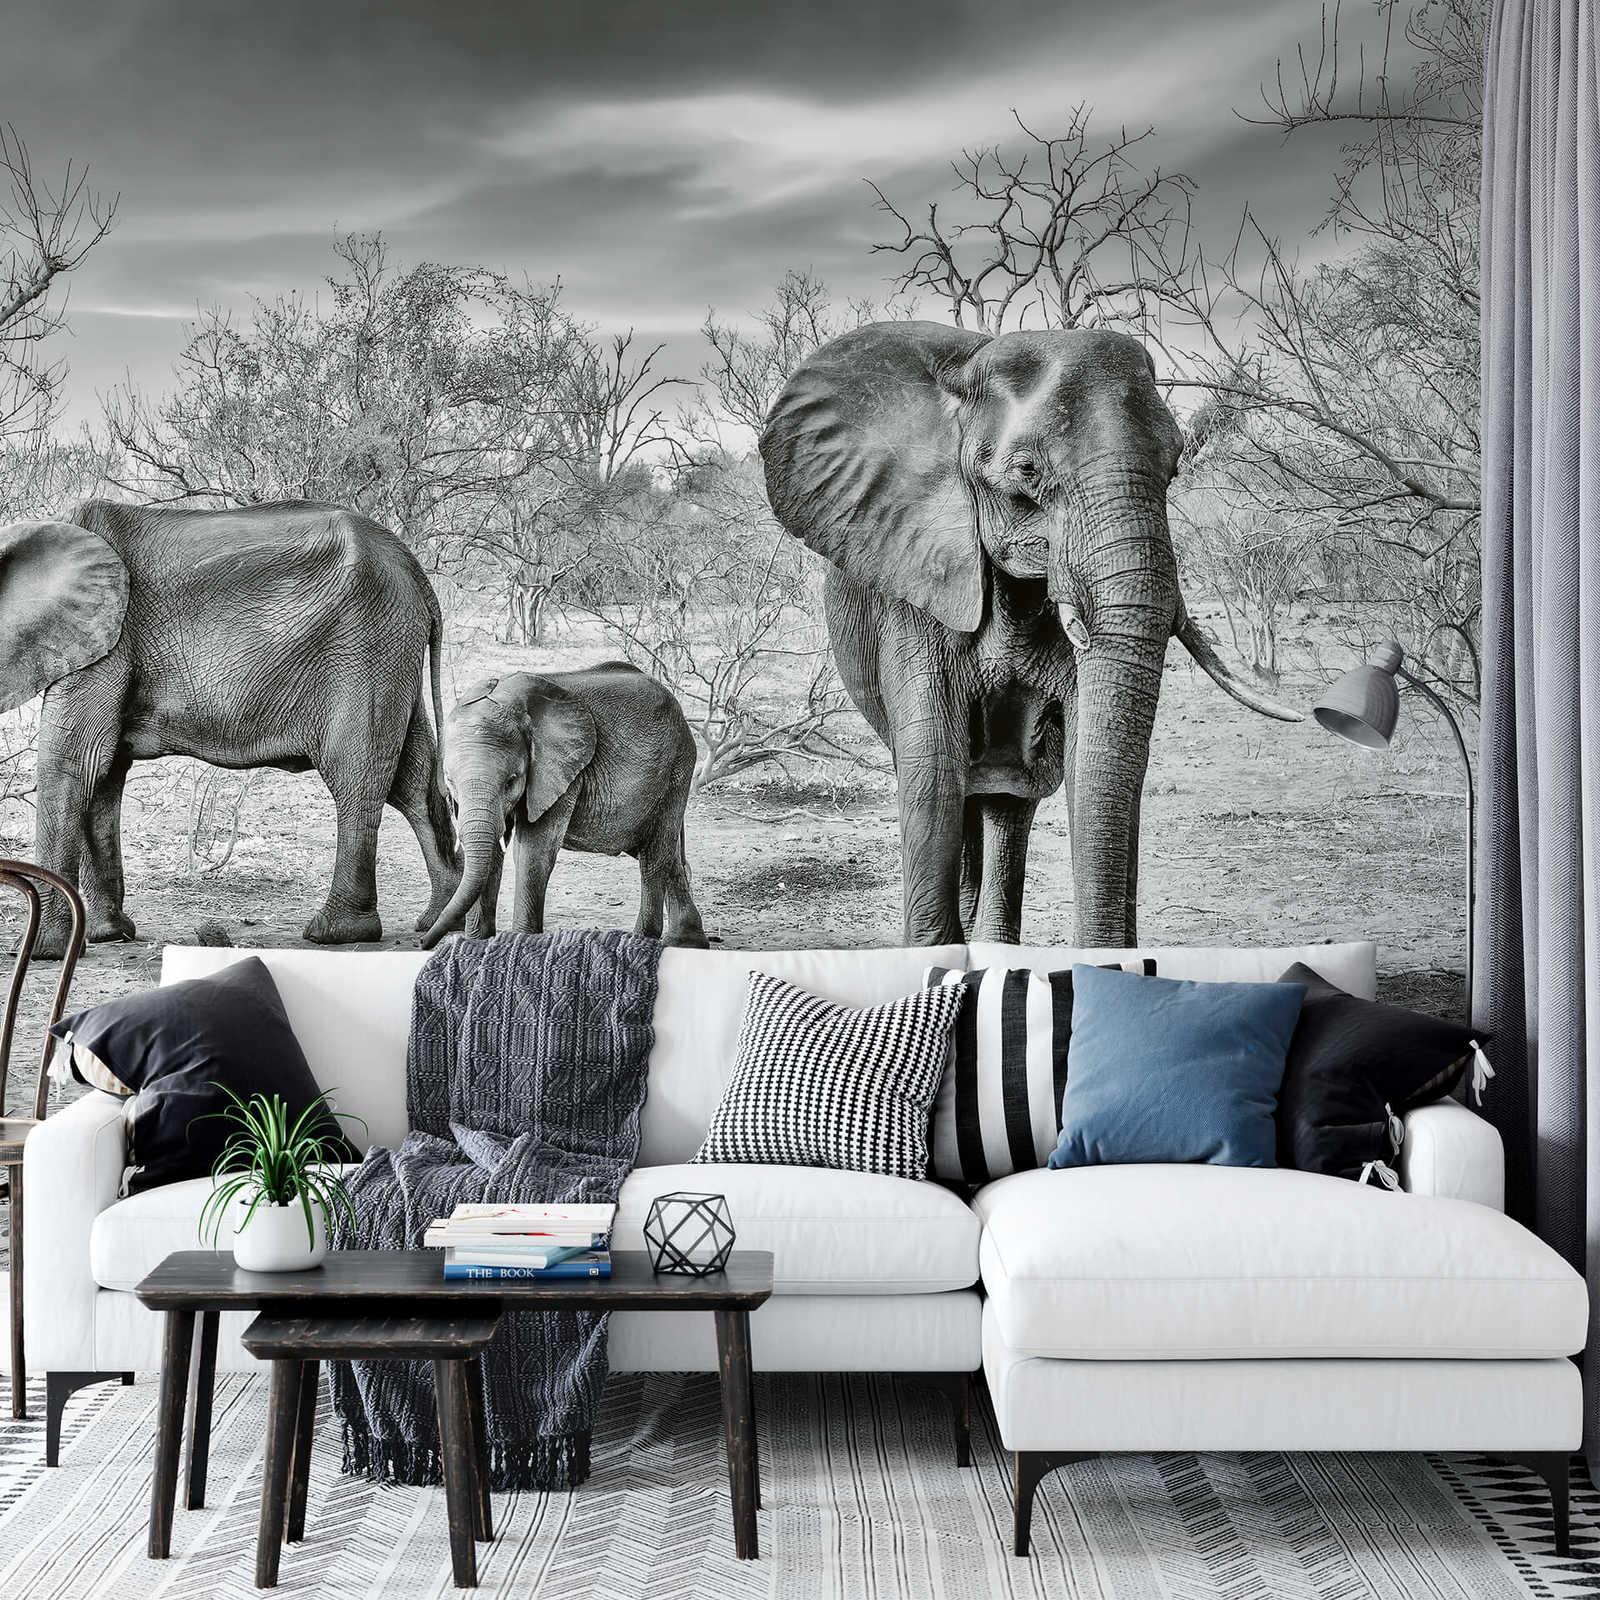             Fototapete Elefanten Familie – Grau, Weiß, Schwarz
        